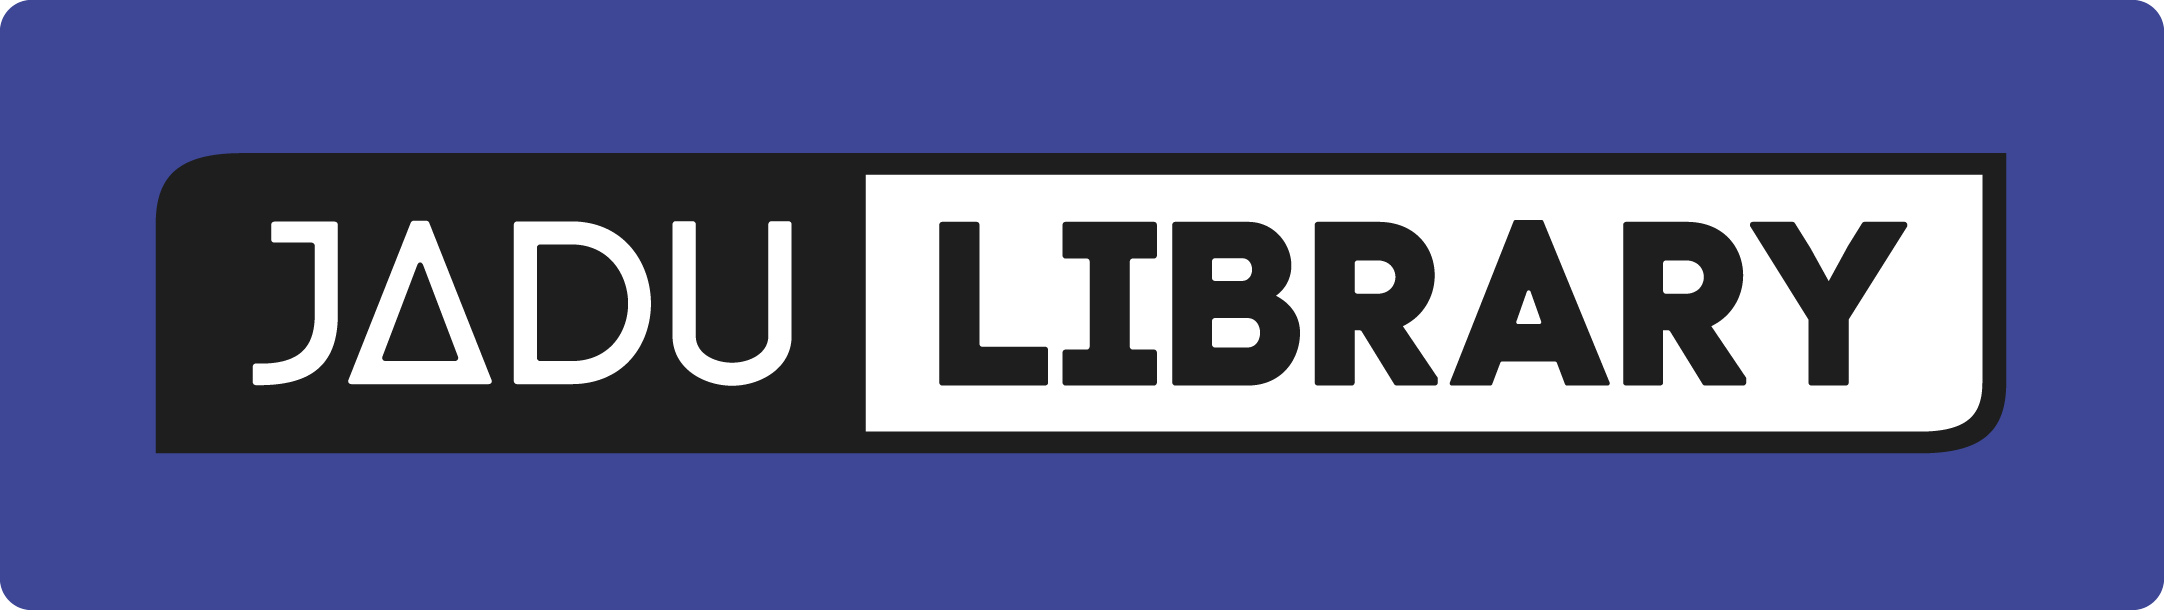 Jadu Library Logo